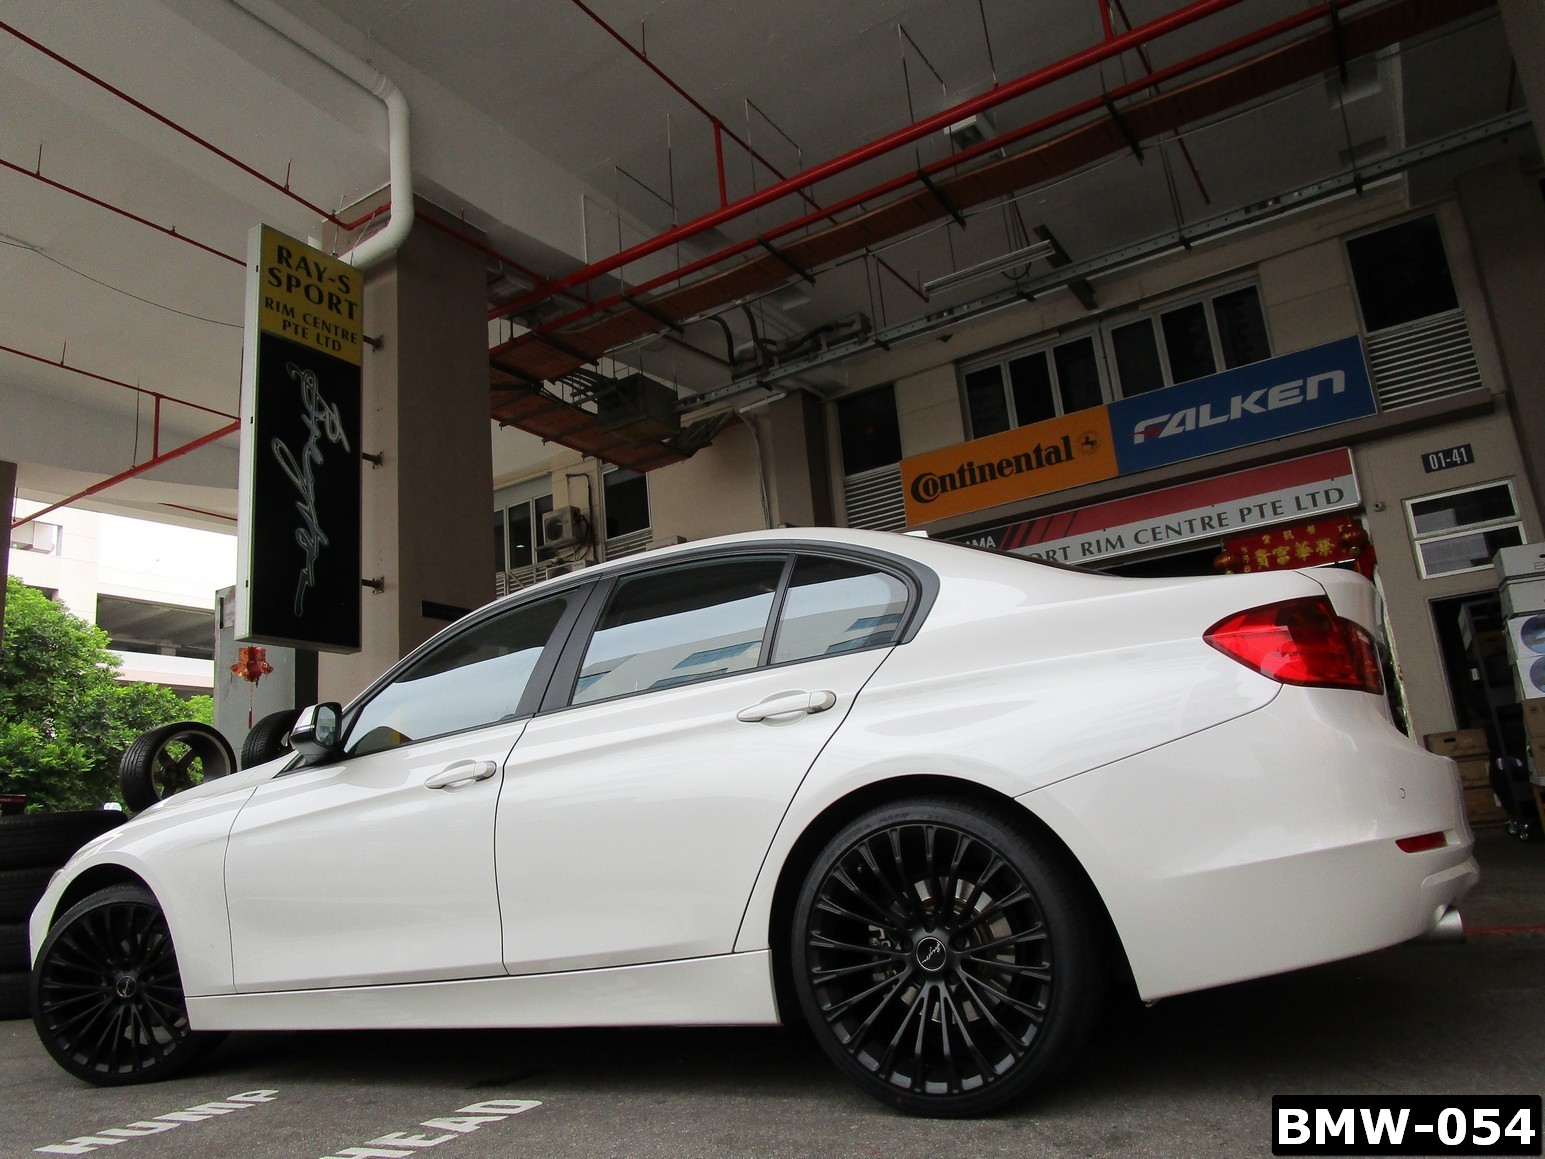 BMW-054.jpg